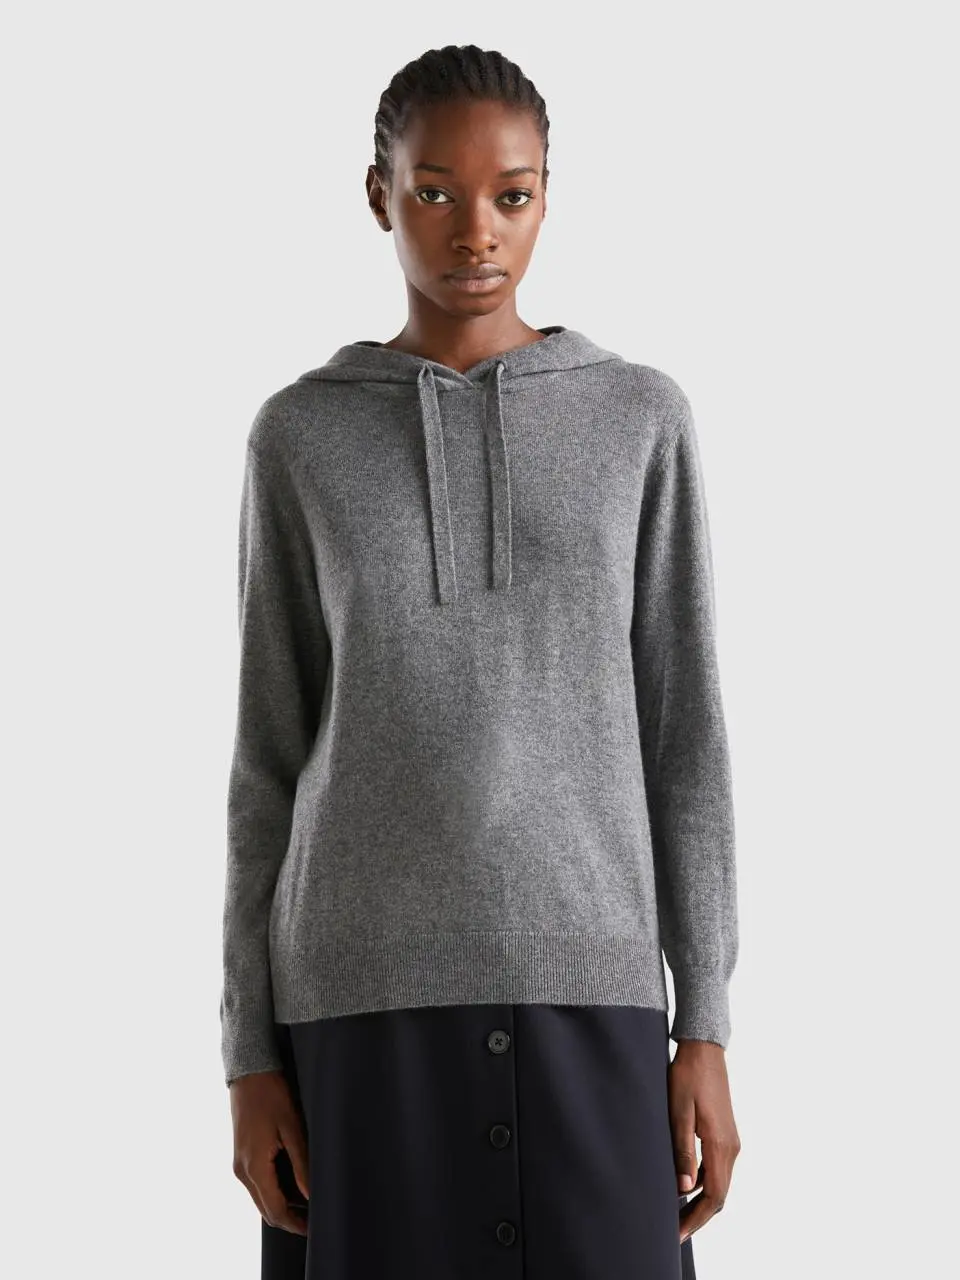 Benetton dark gray sweater with hood. 1